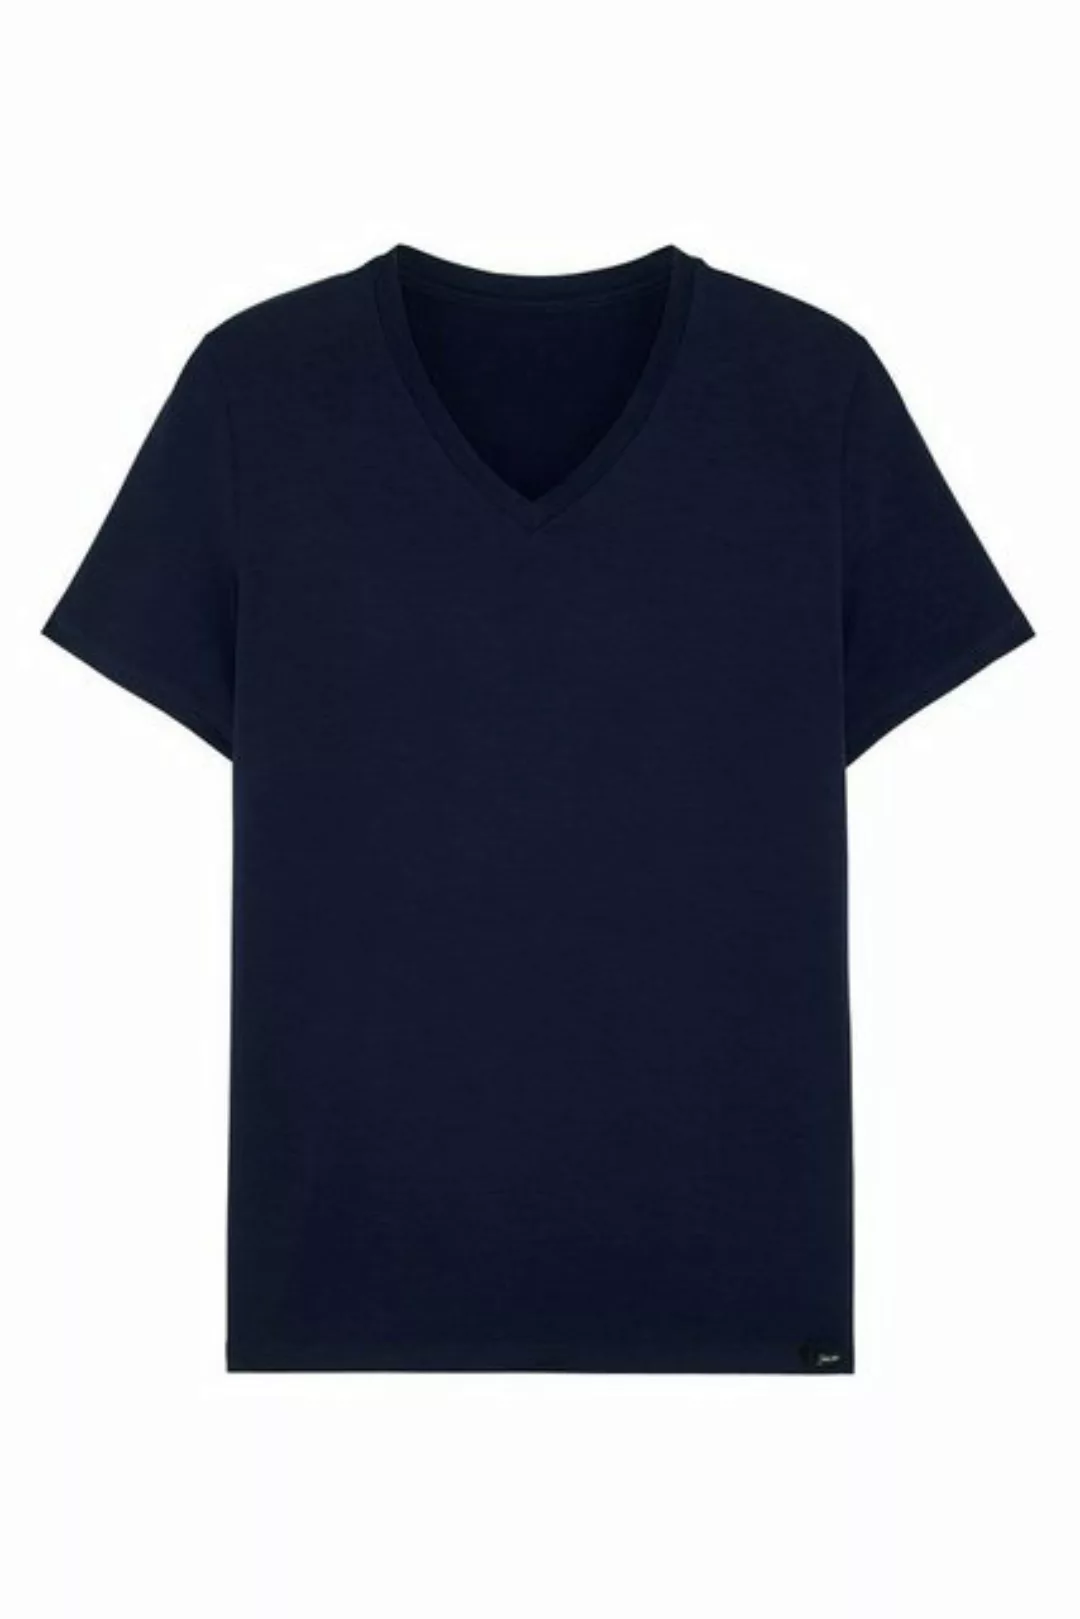 Hom T-Shirt T-Shirt V-Neck 402466 günstig online kaufen